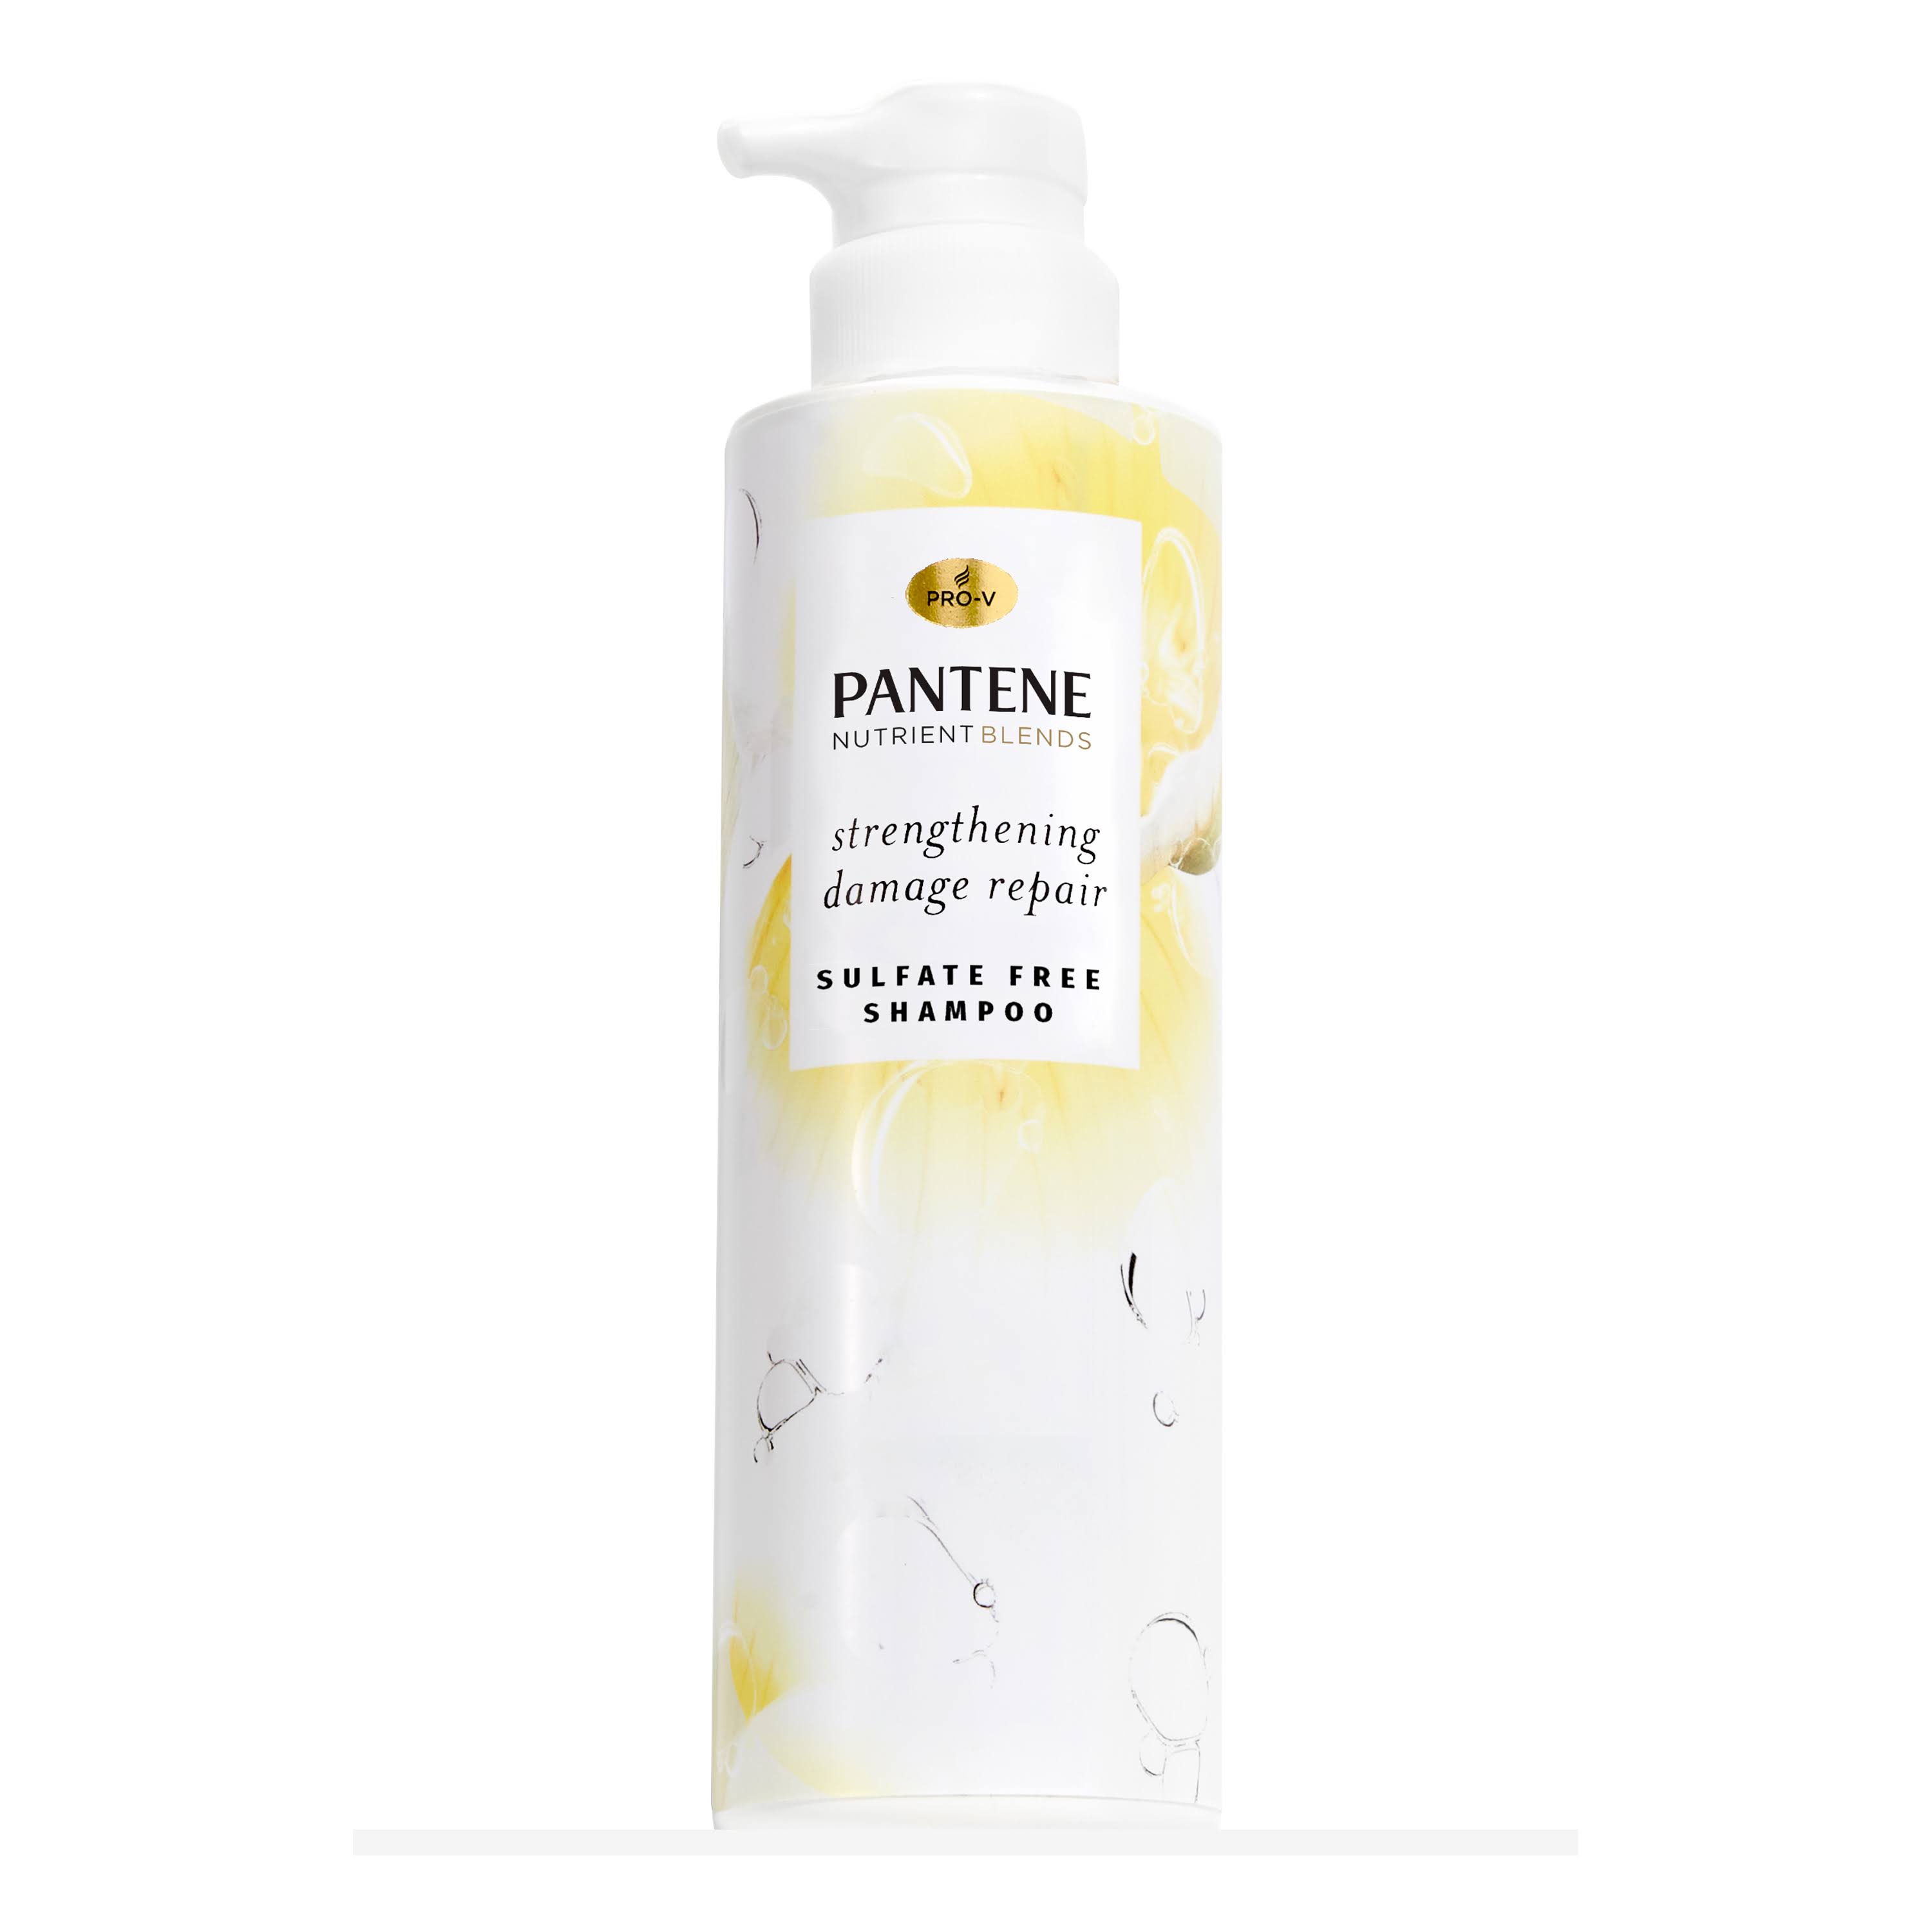 Pantene Nutrient Blends Strengthening Damage Repair Sulfate Free Shampoo with Castor Oil - 14.8 fl oz